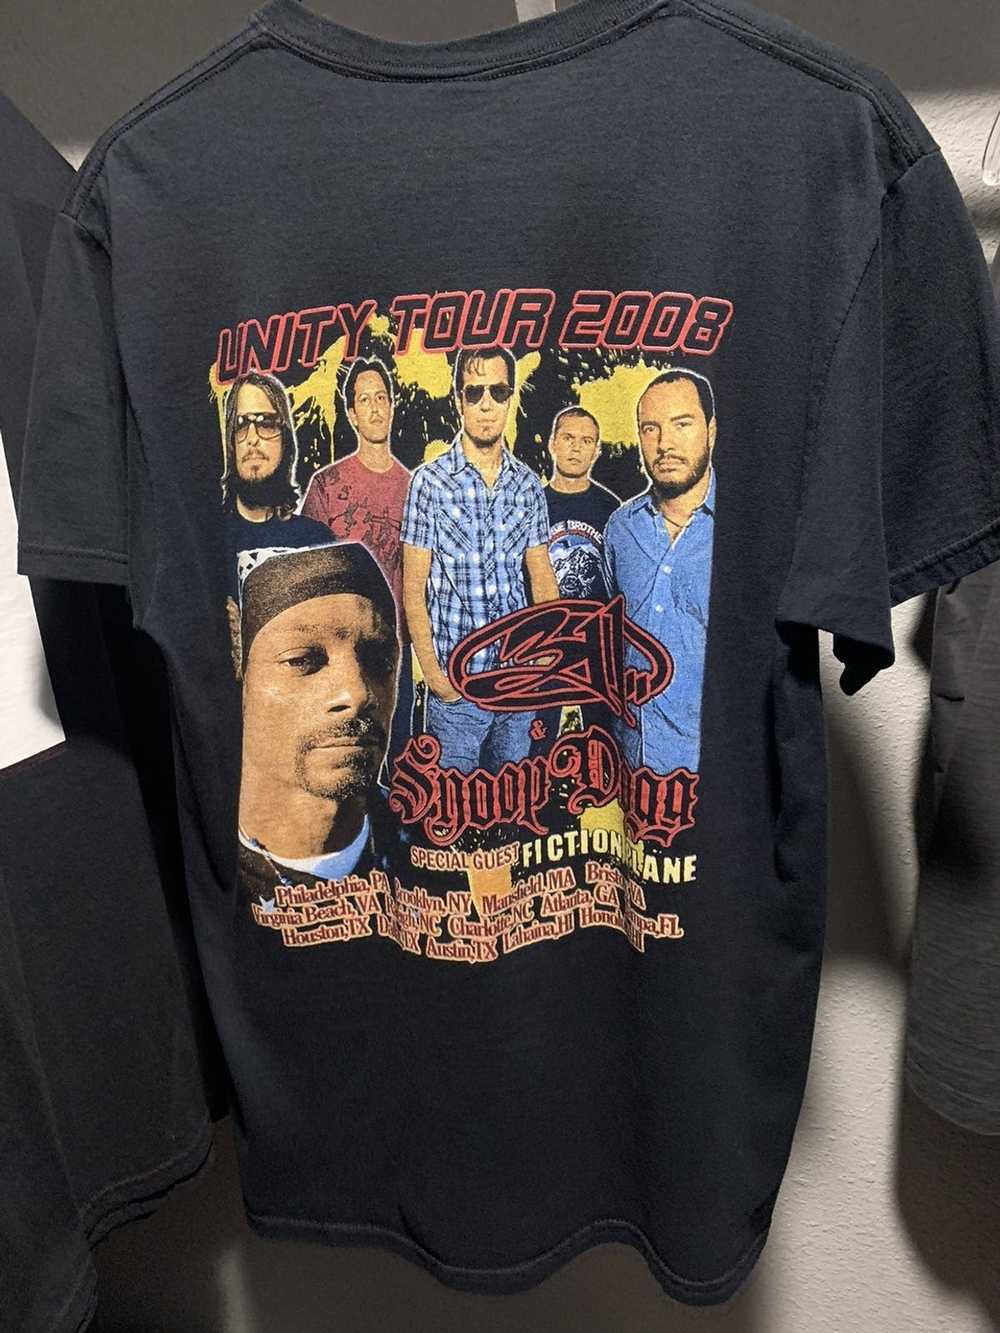 Snoop dogg shirt - Gem